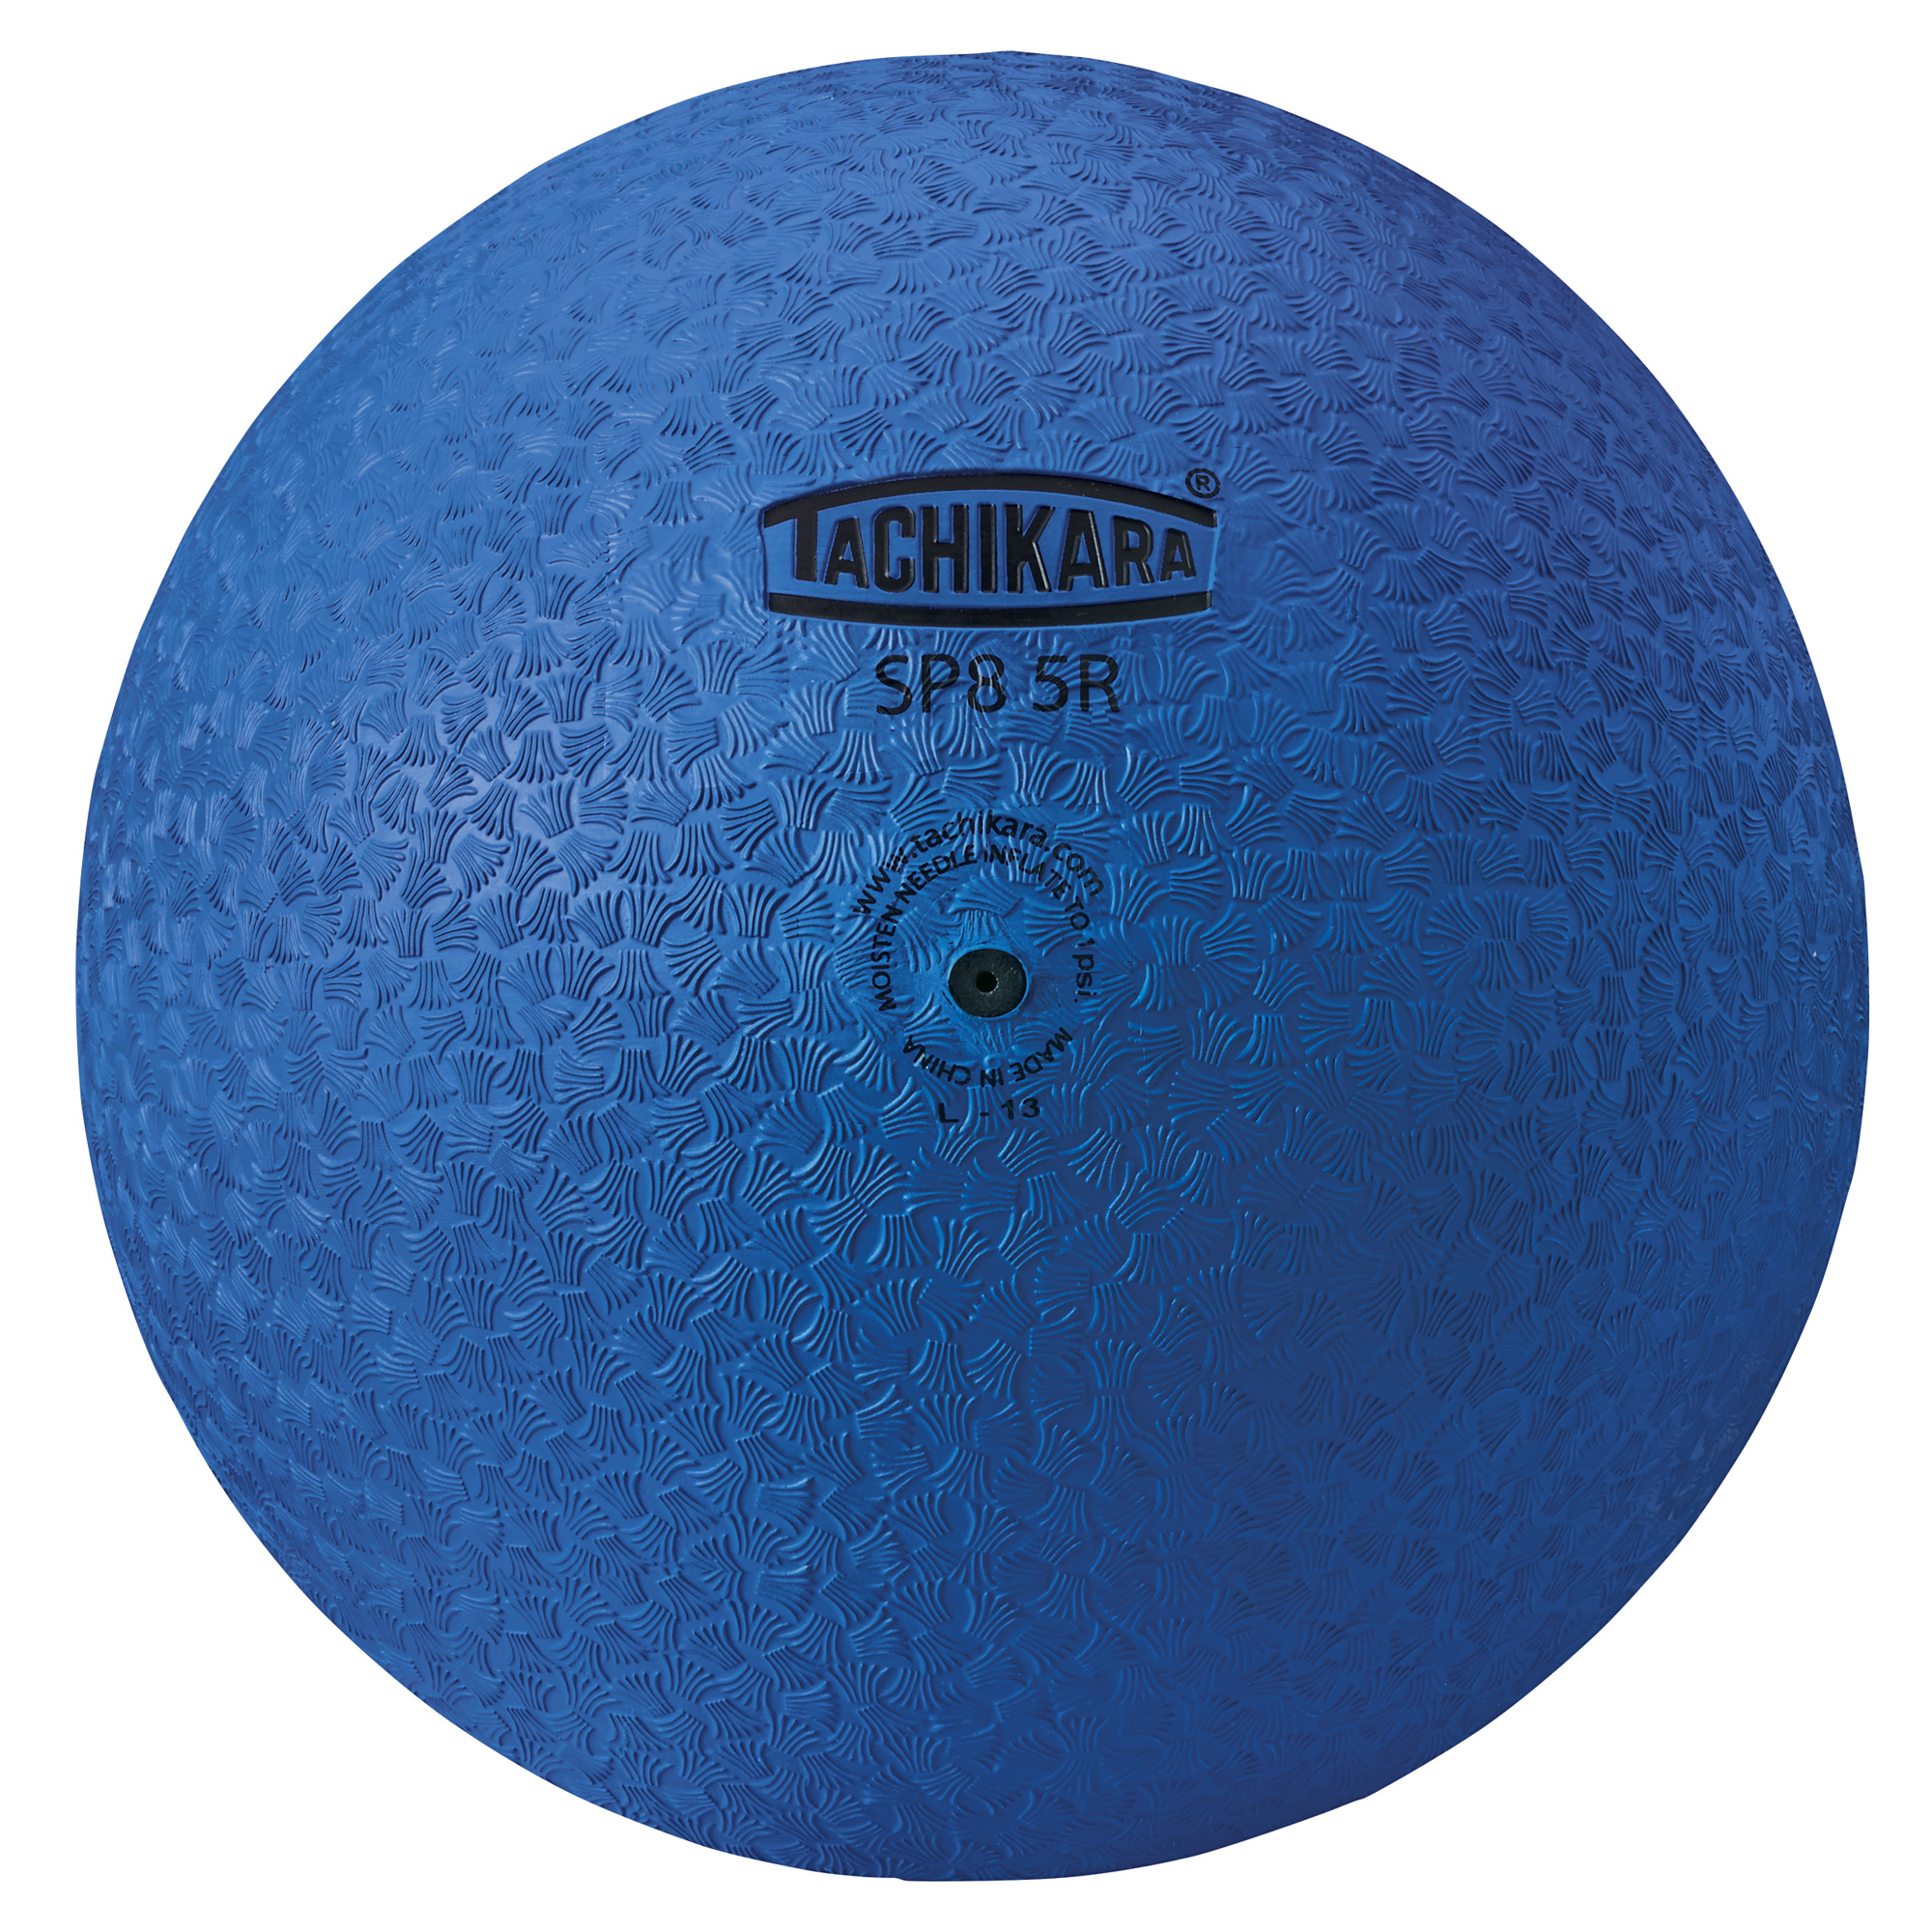 Tachikara SP85R 8.5" Rubber Playground Ball (Blue)